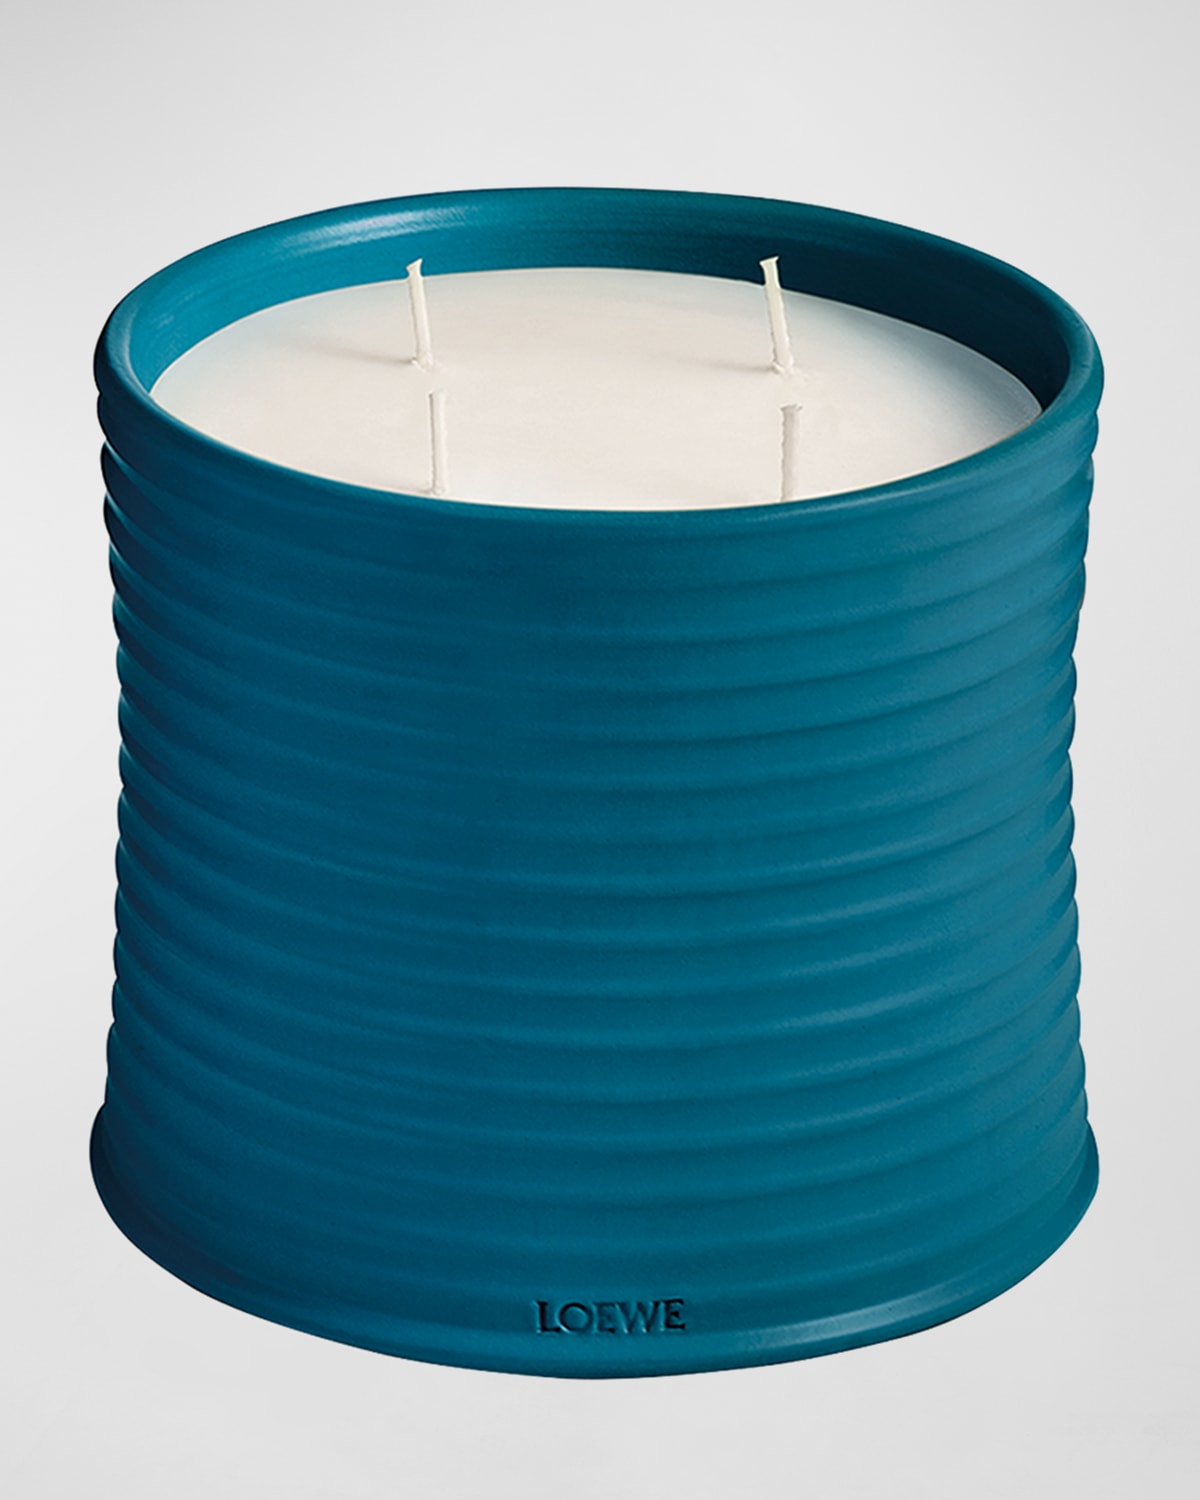 Loewe Large Incense Candle, 2100 G